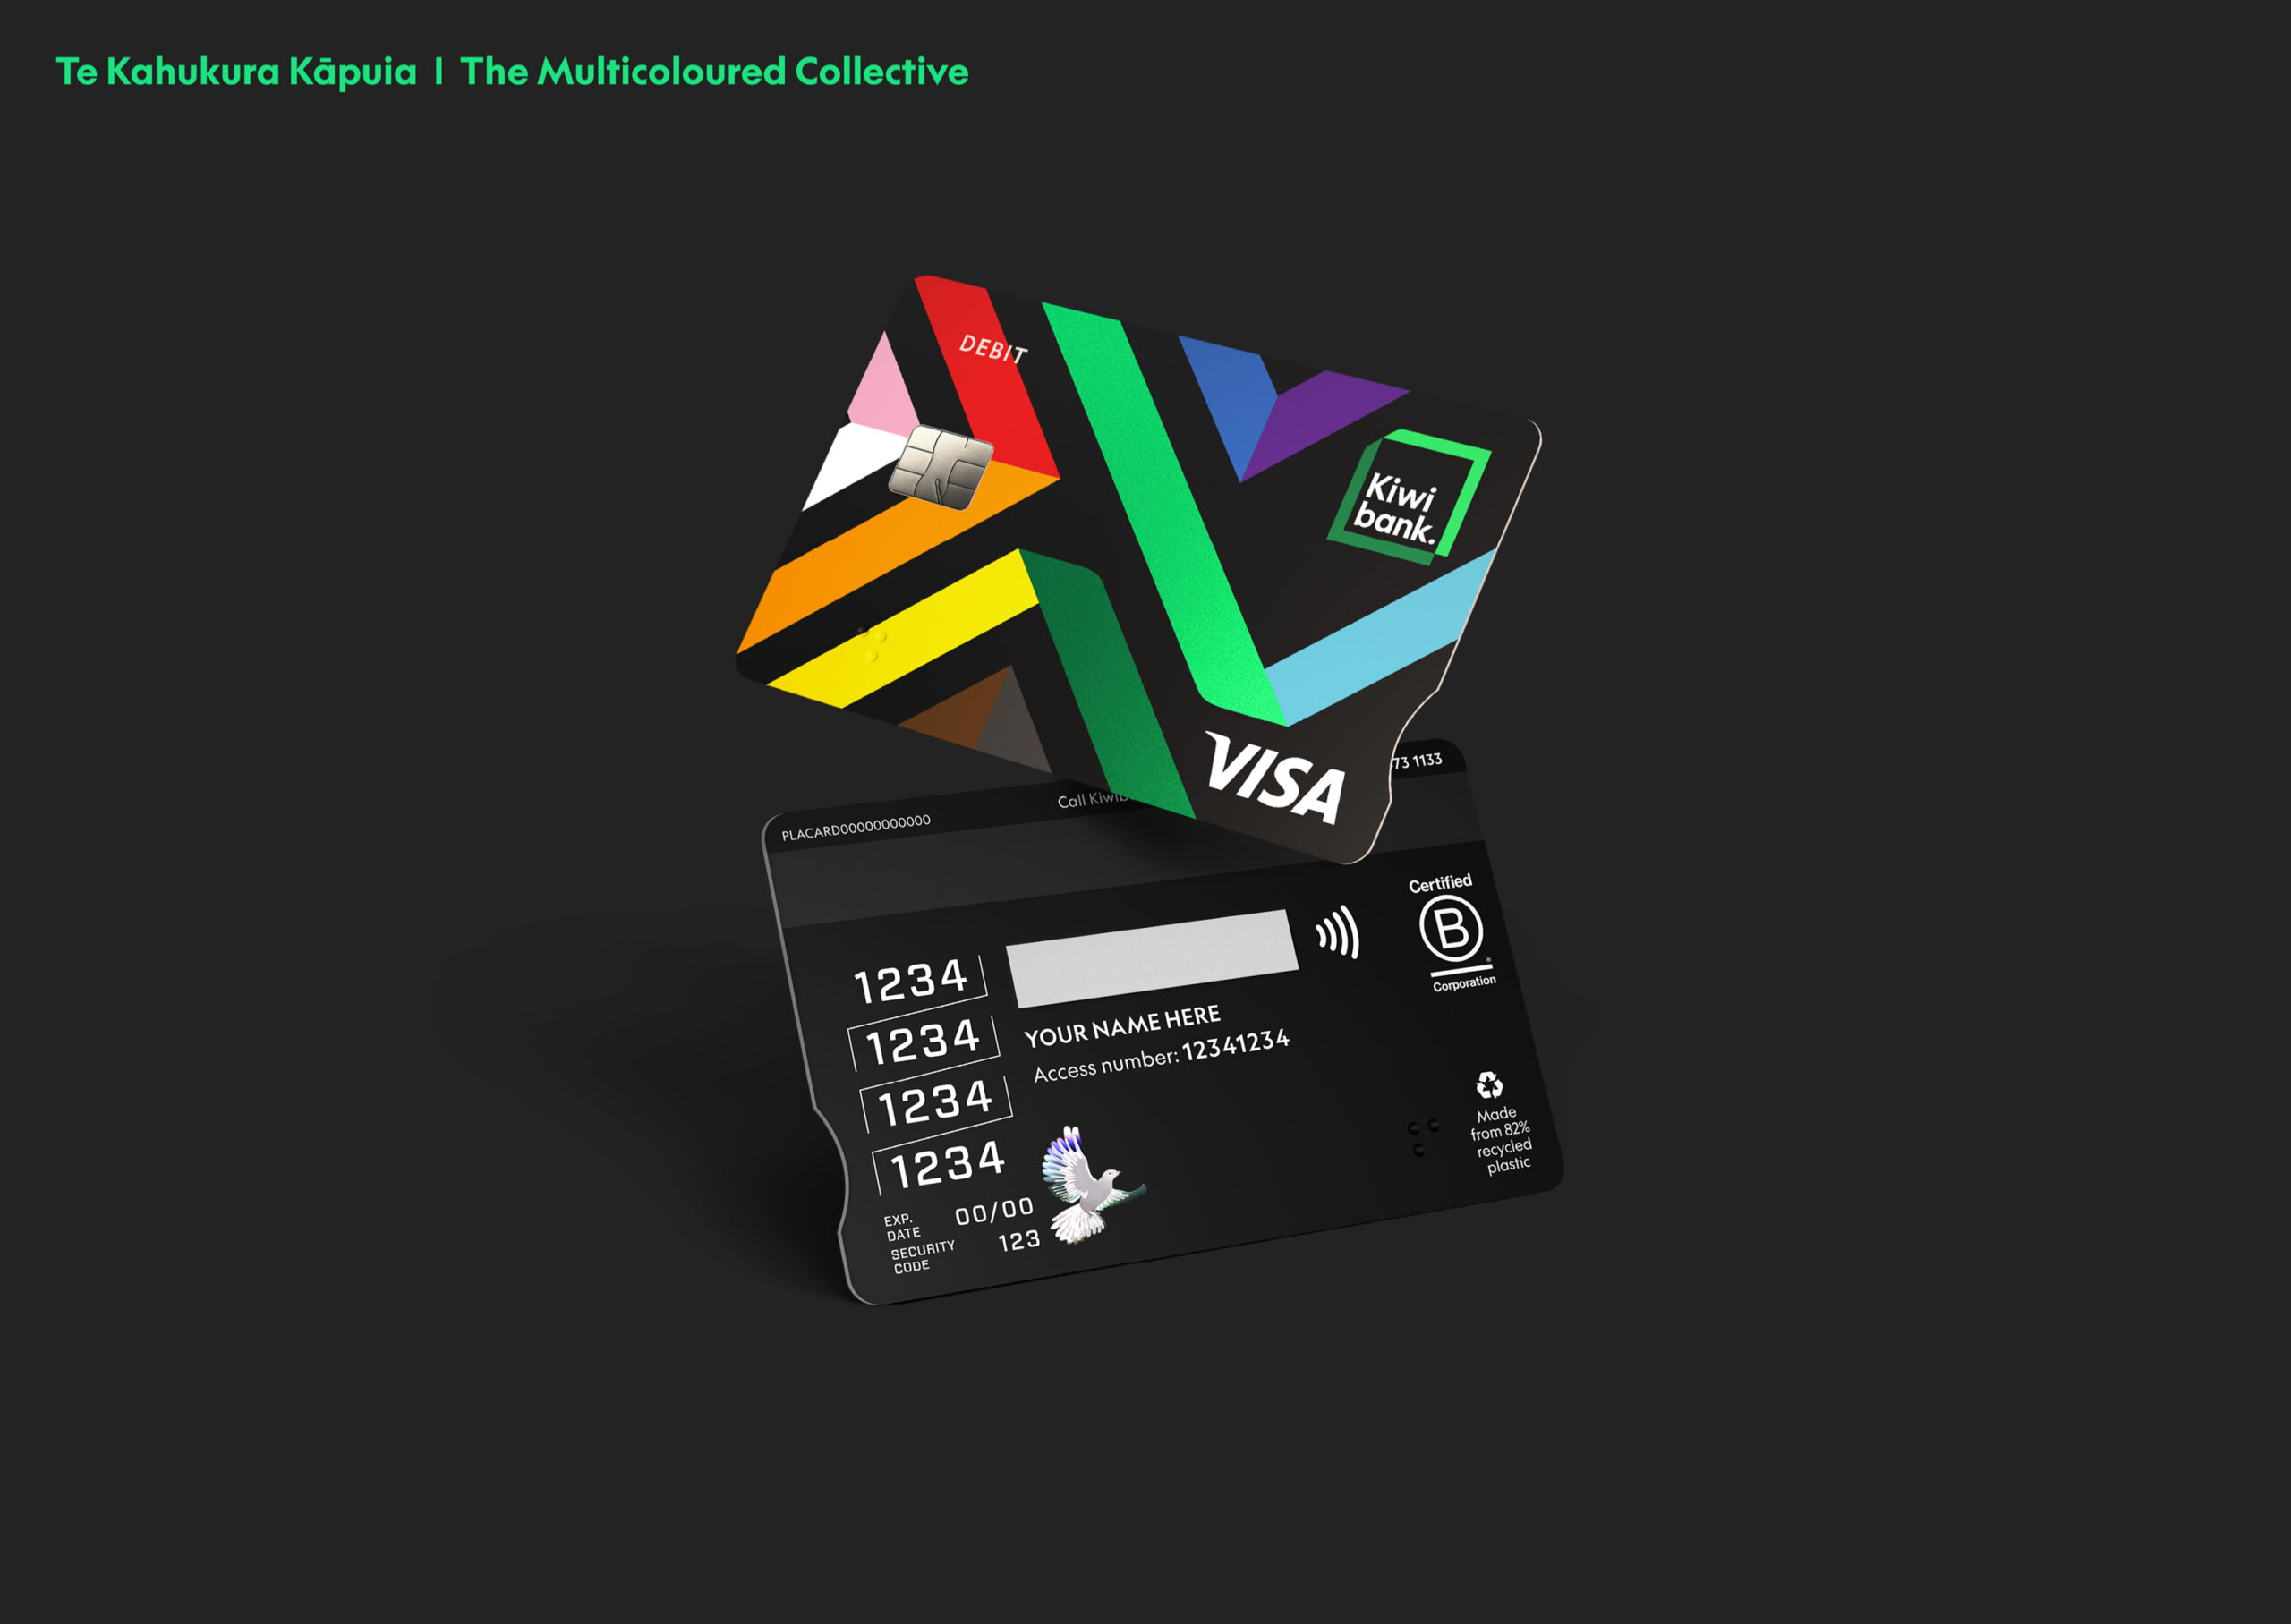 Kiwibank credit cards